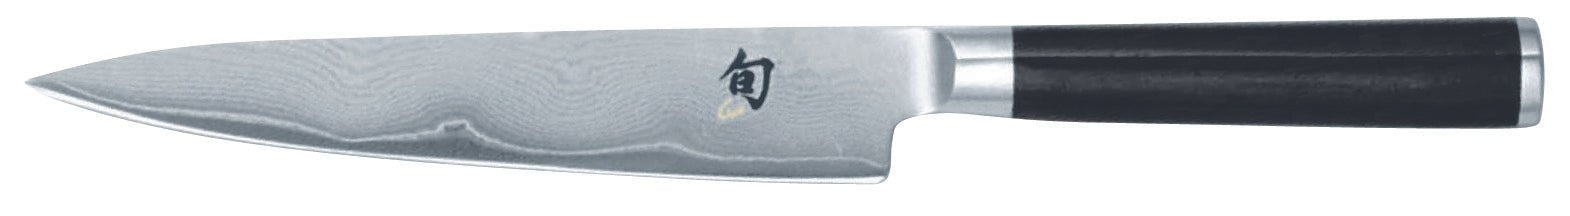 KAI Shun 15cm Utility Knife Left handed - KAI-DM-0701L - The Cotswold Knife Company